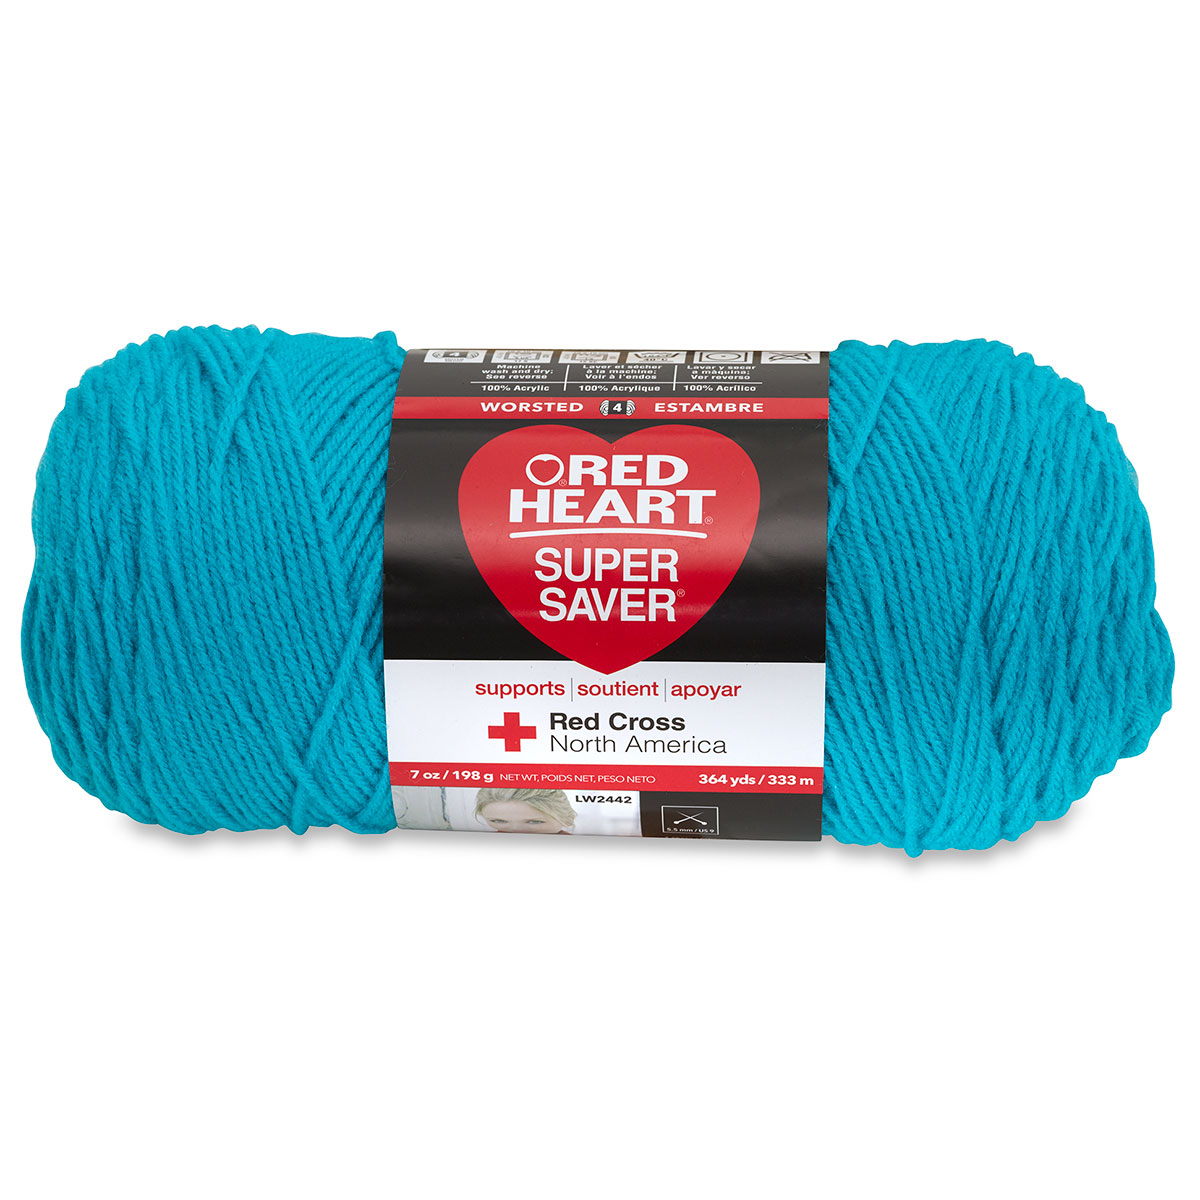 Red Heart Super Saver Yarn - Turqua